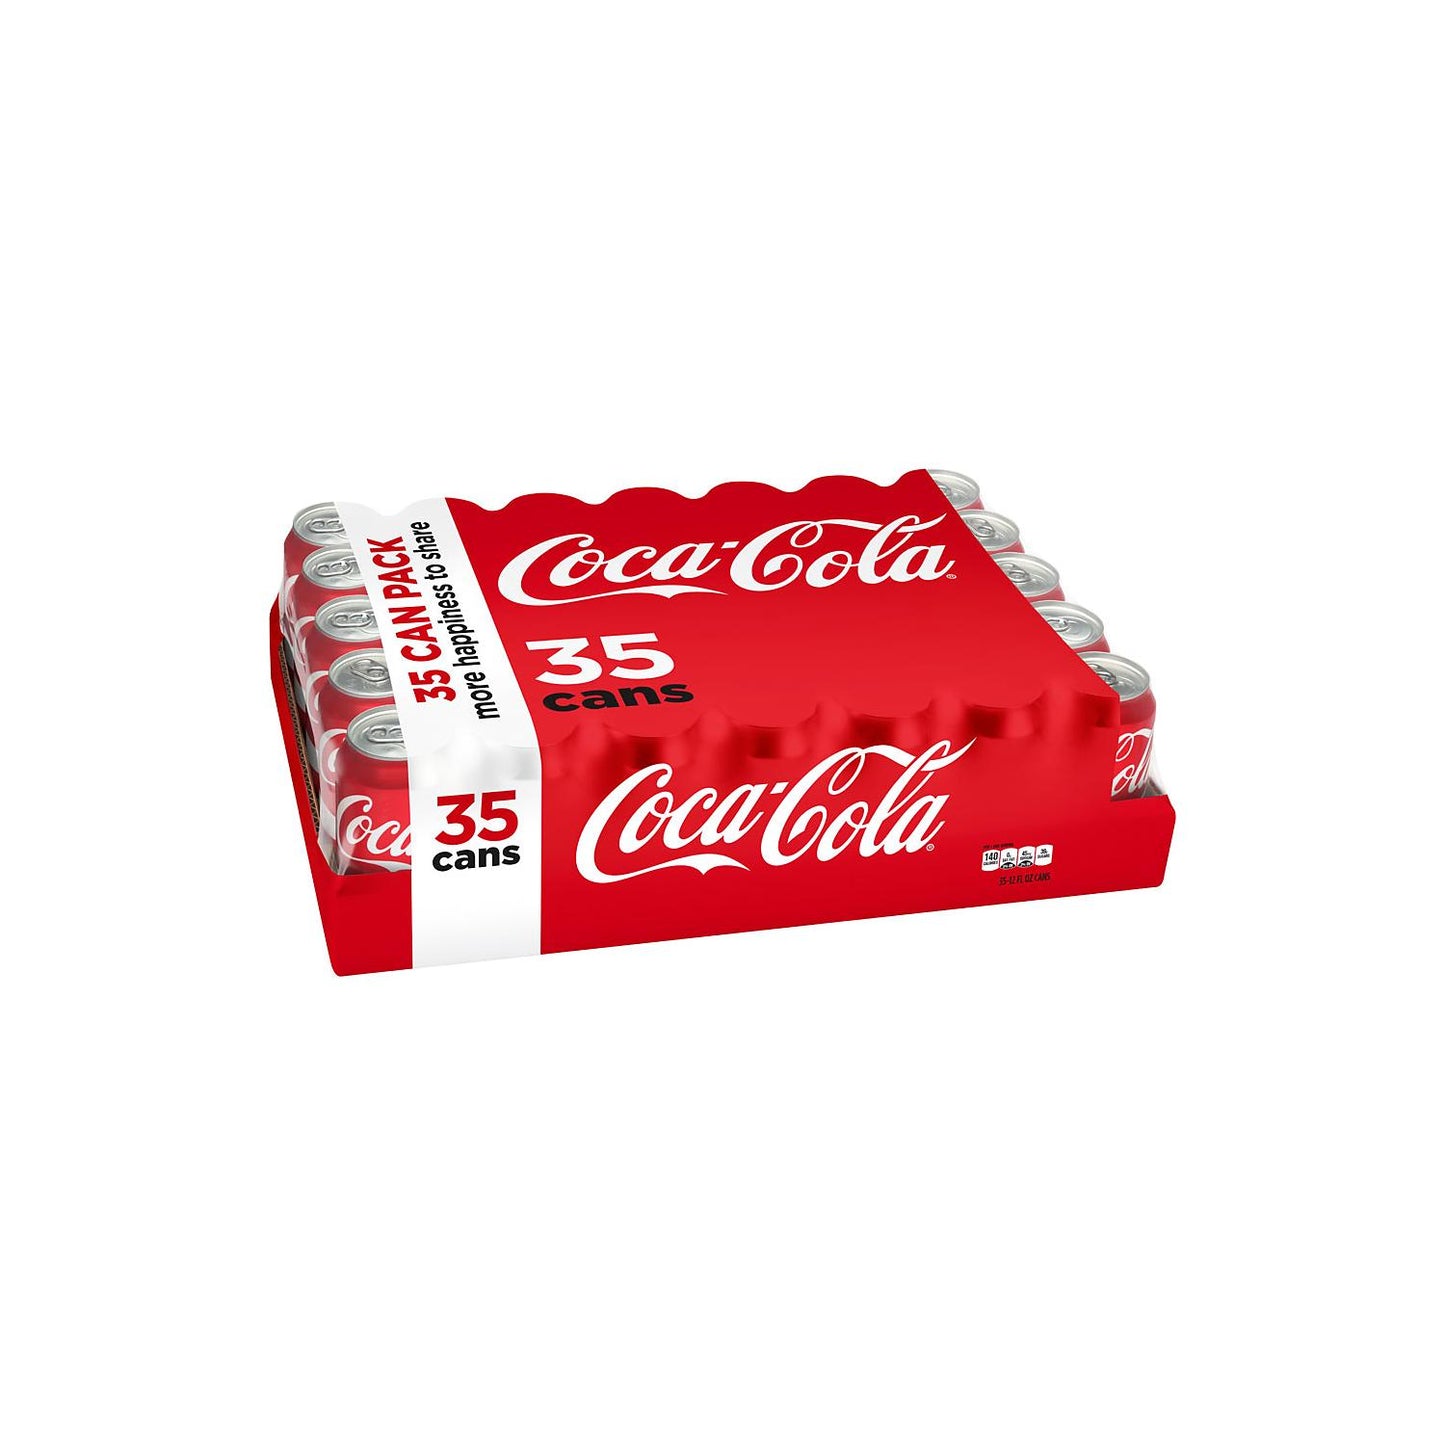 Coca-Cola,Coke(12 oz. cans, 35 pk )